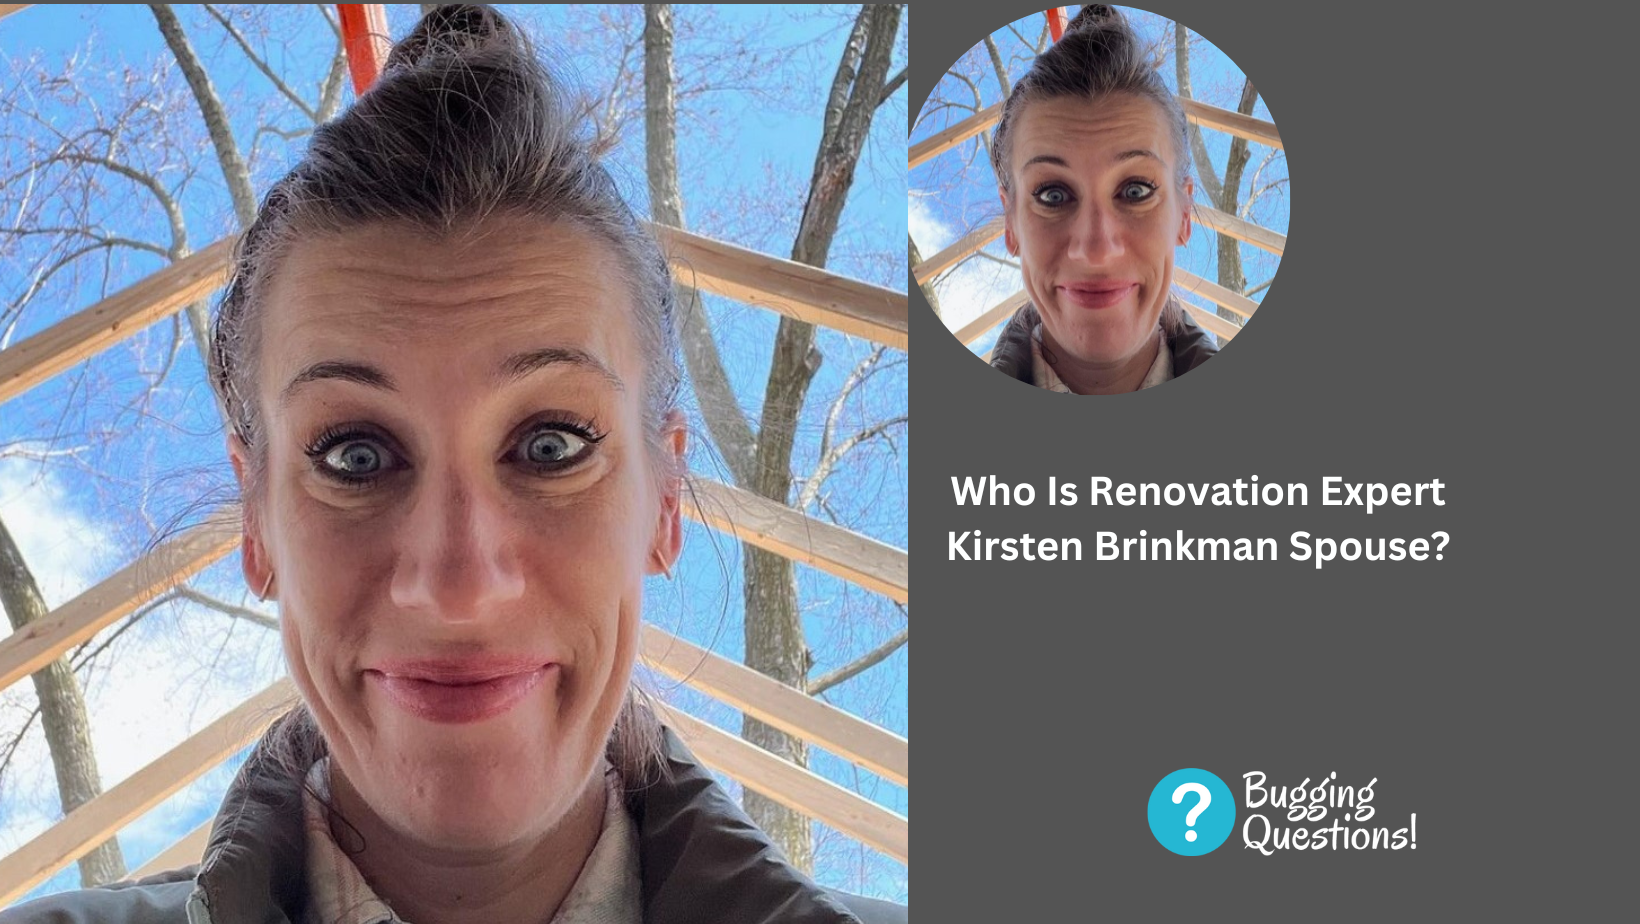 Who Is Renovation Expert Kirsten Brinkman Spouse?